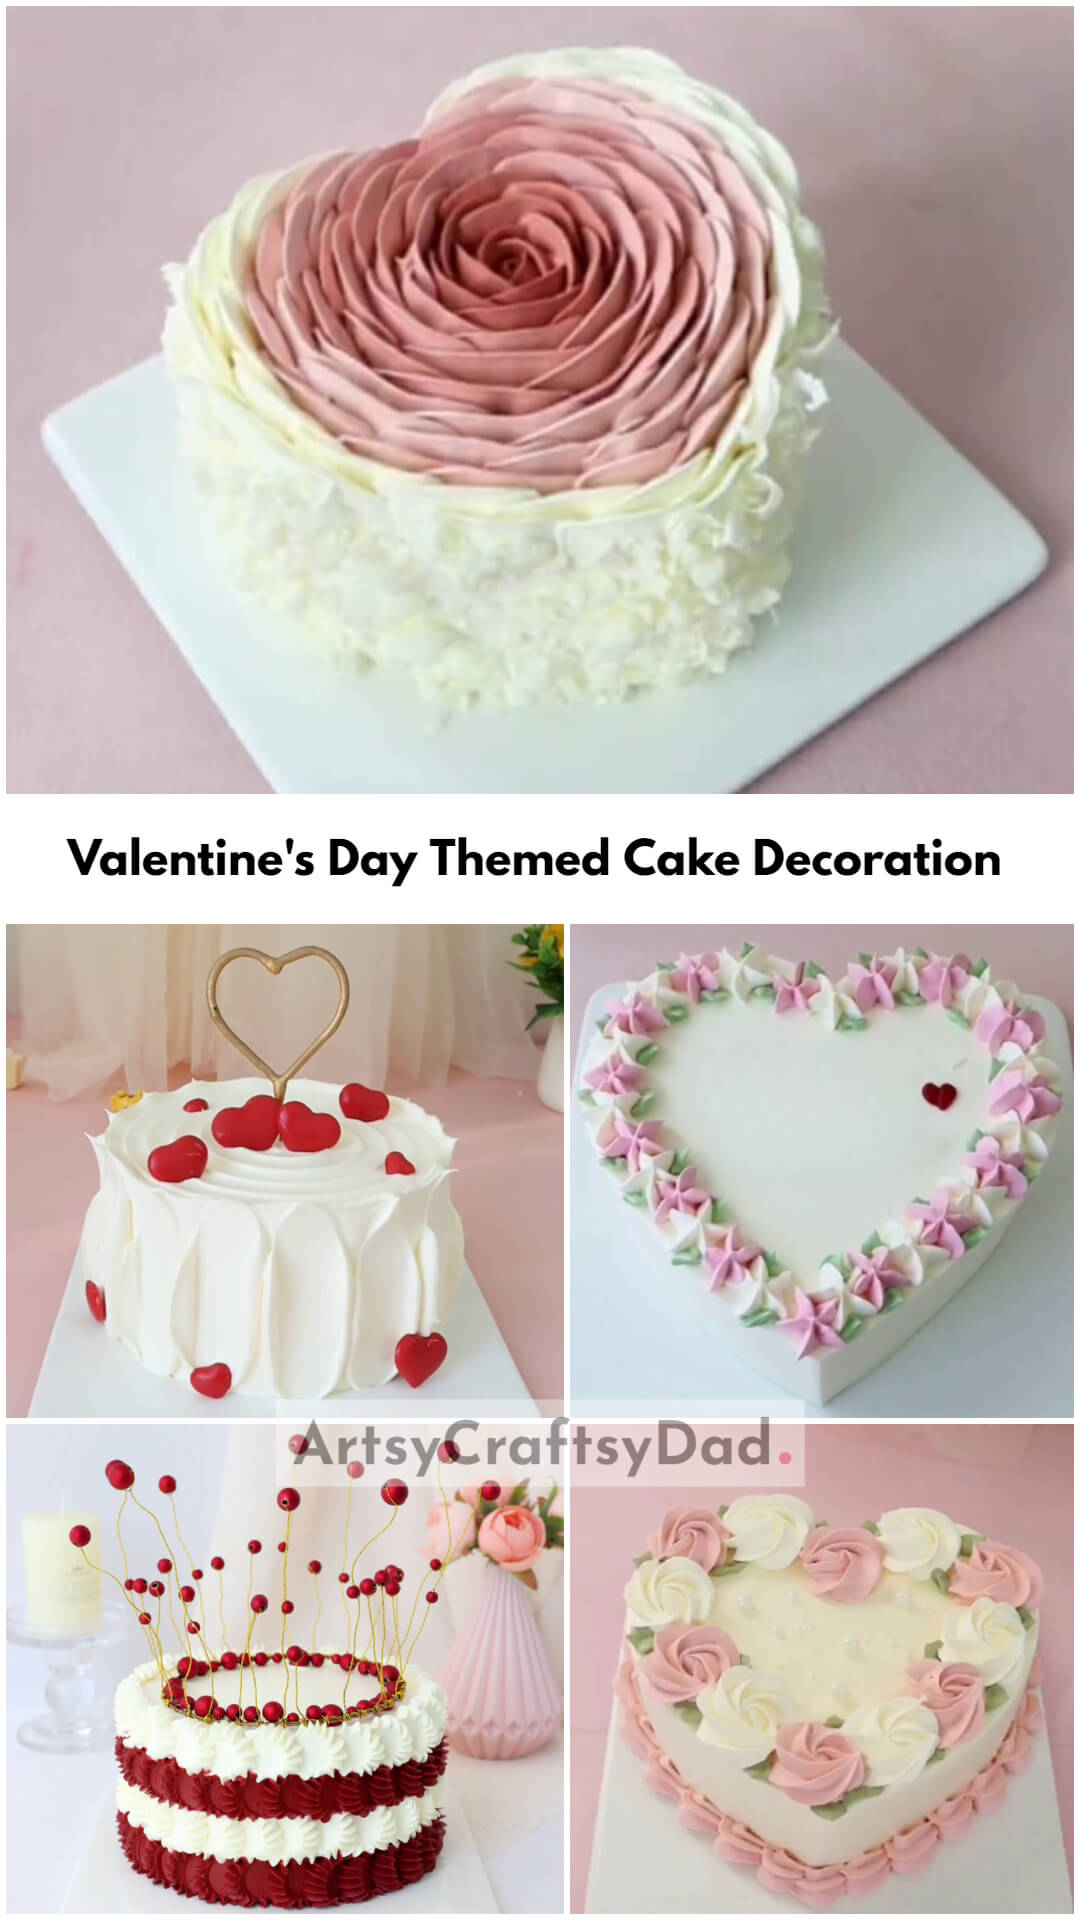 Valentine's Day Themed Cake Decoration Ideas